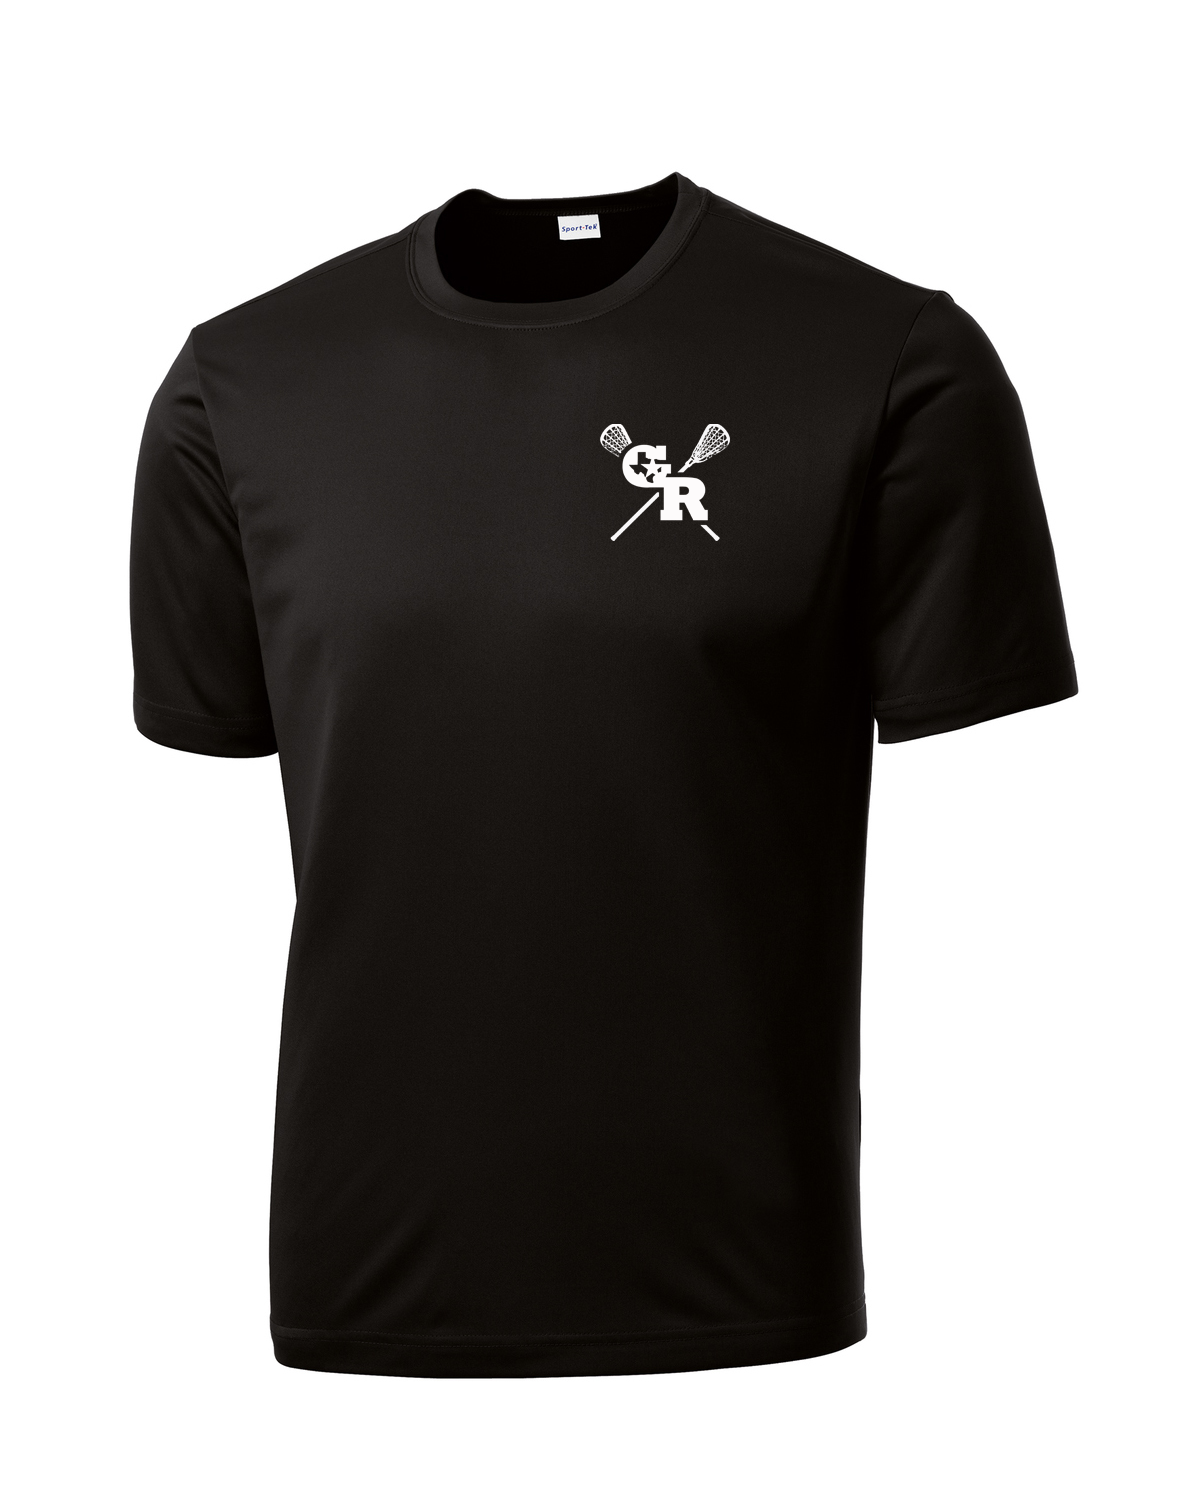 GR Longhorns Lacrosse Performance T-Shirt